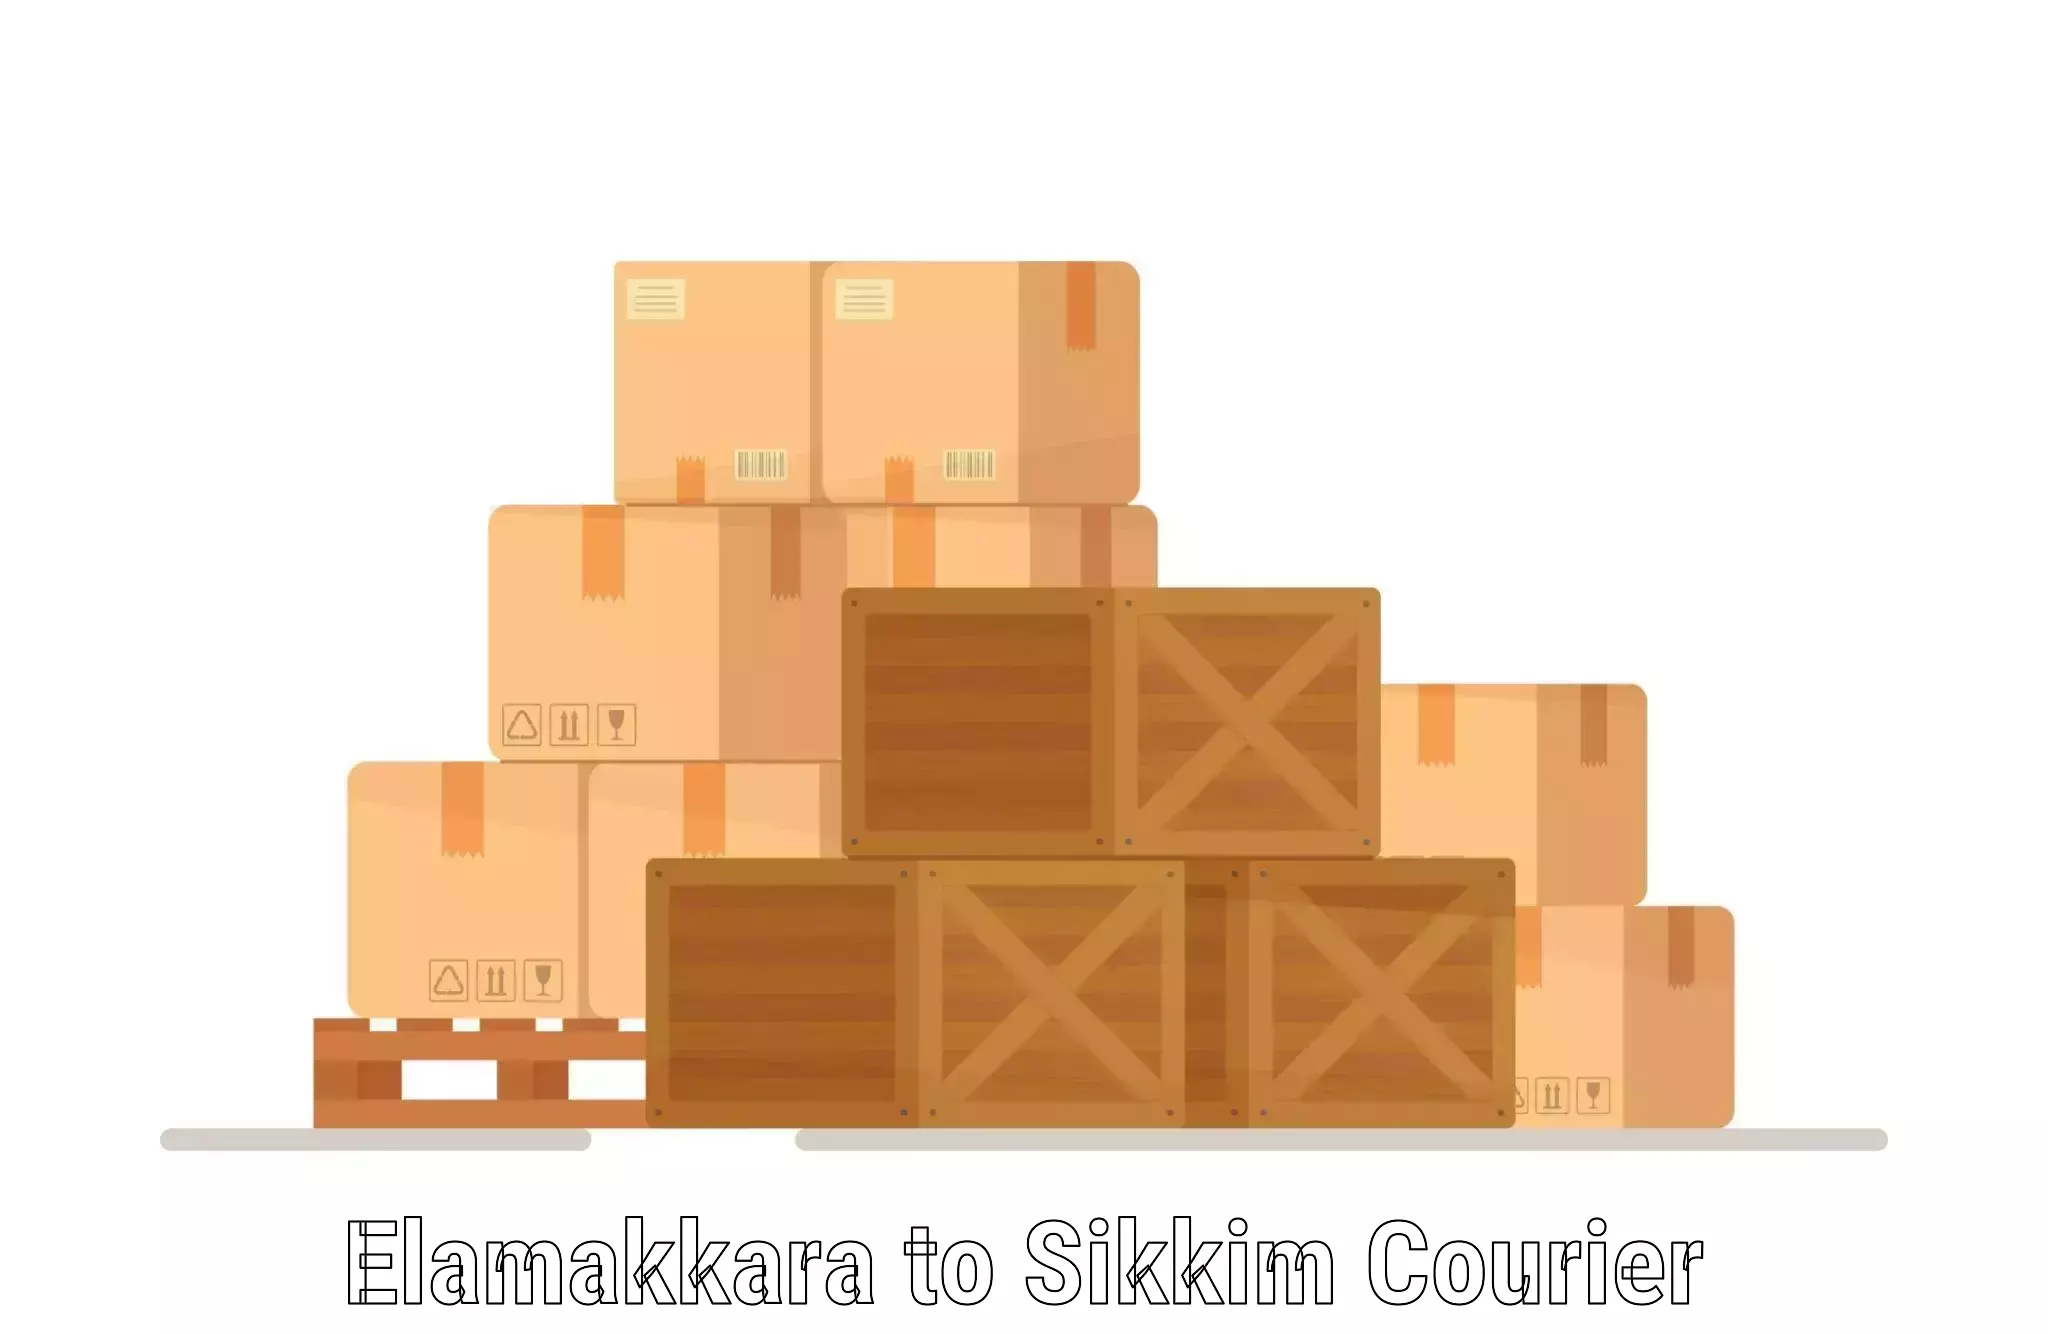 Personalized courier experiences Elamakkara to Rangpo